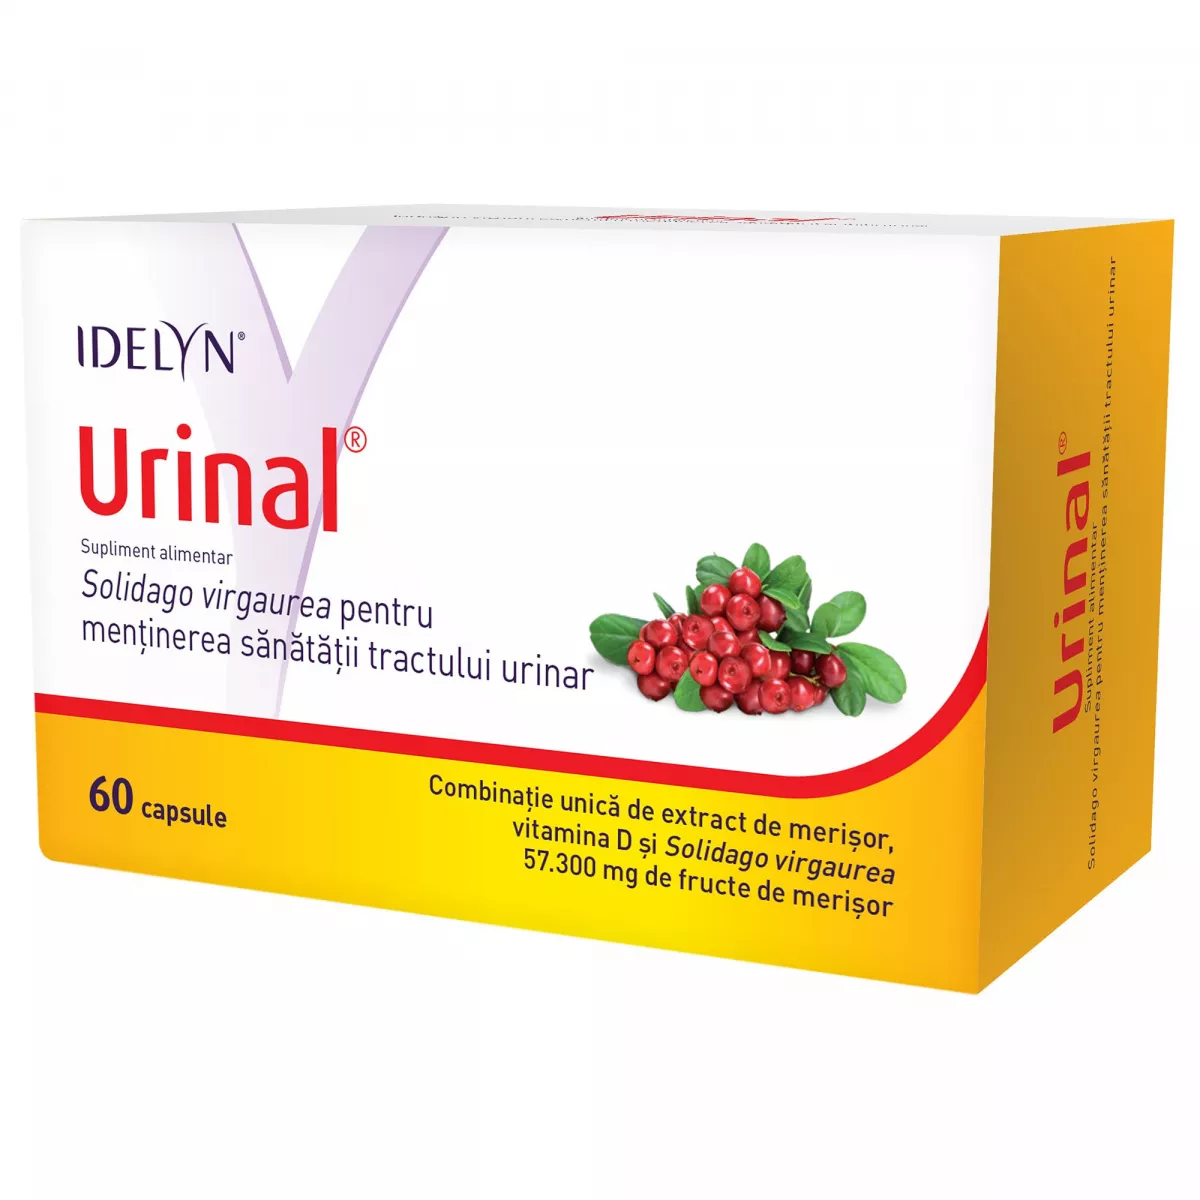 W-Urinal x 60cps, [],remediumfarm.ro